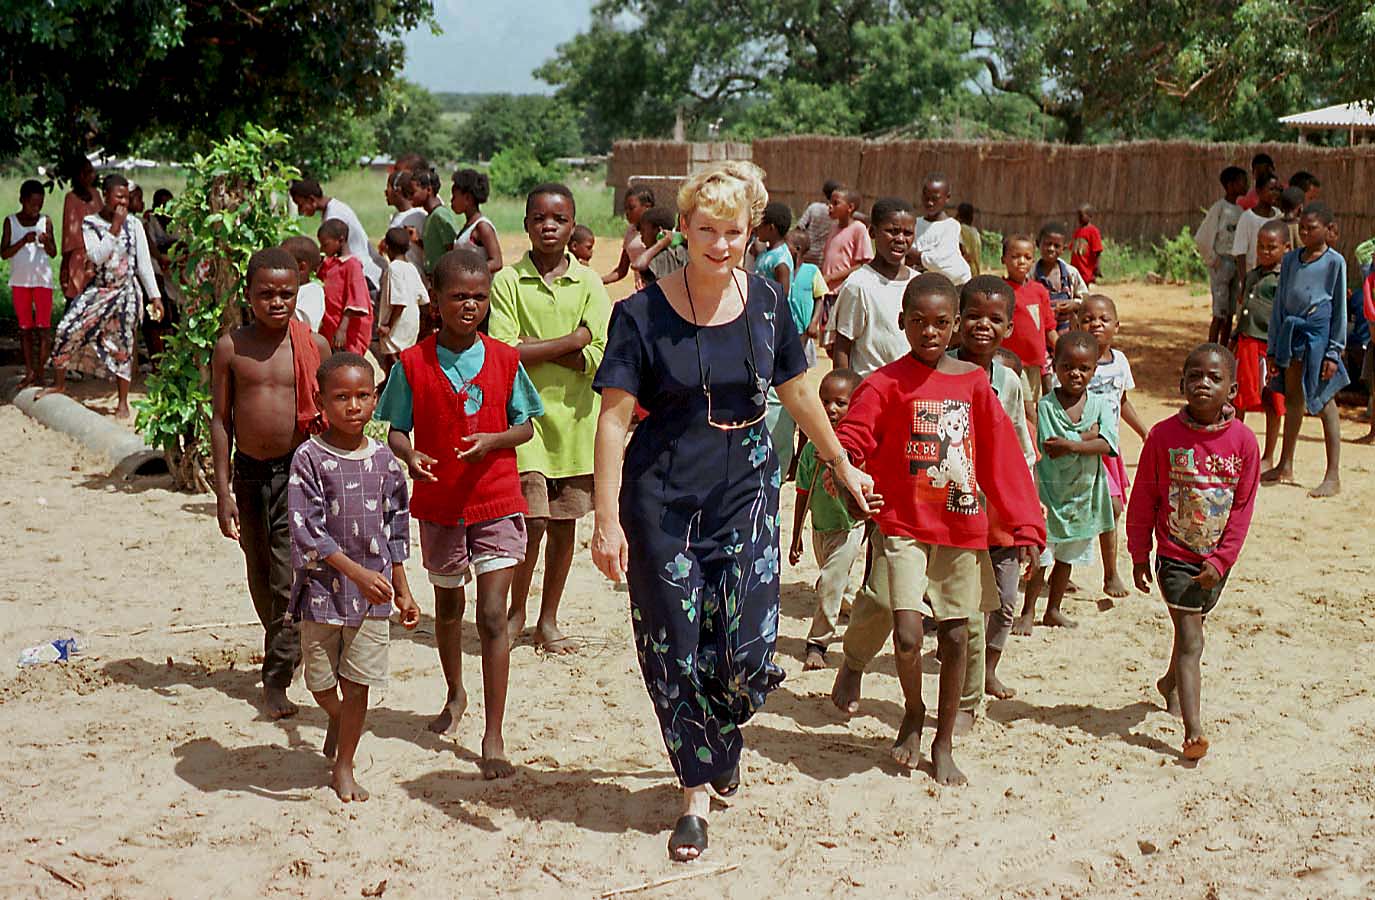 Heidi Baker walking with kids in Mozambique